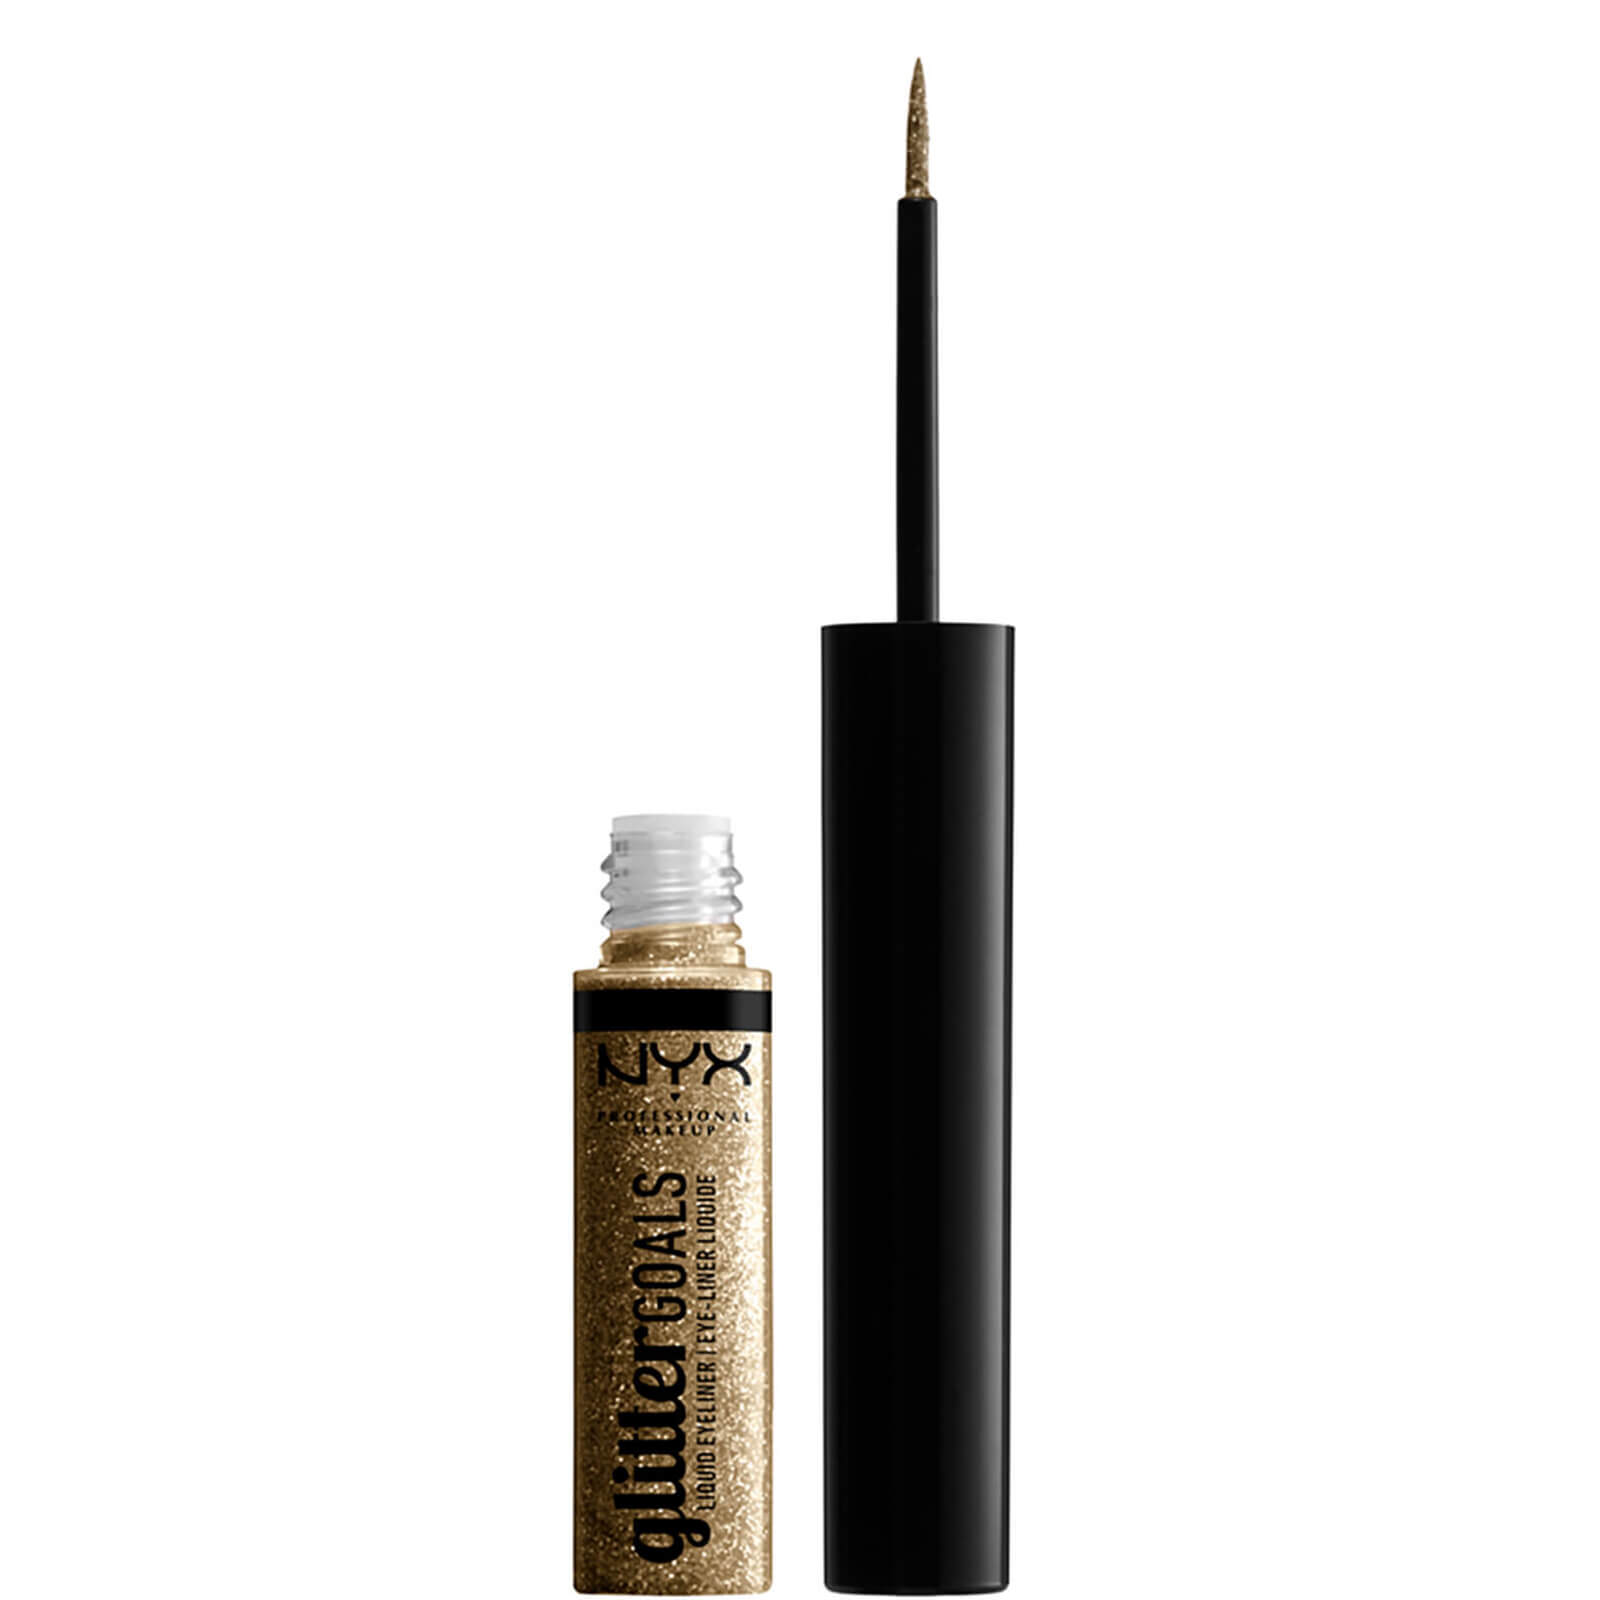 NYX Professional Makeup Glitter Goals Liquid Eyeliner (Various Shades) - Zodiac Queen